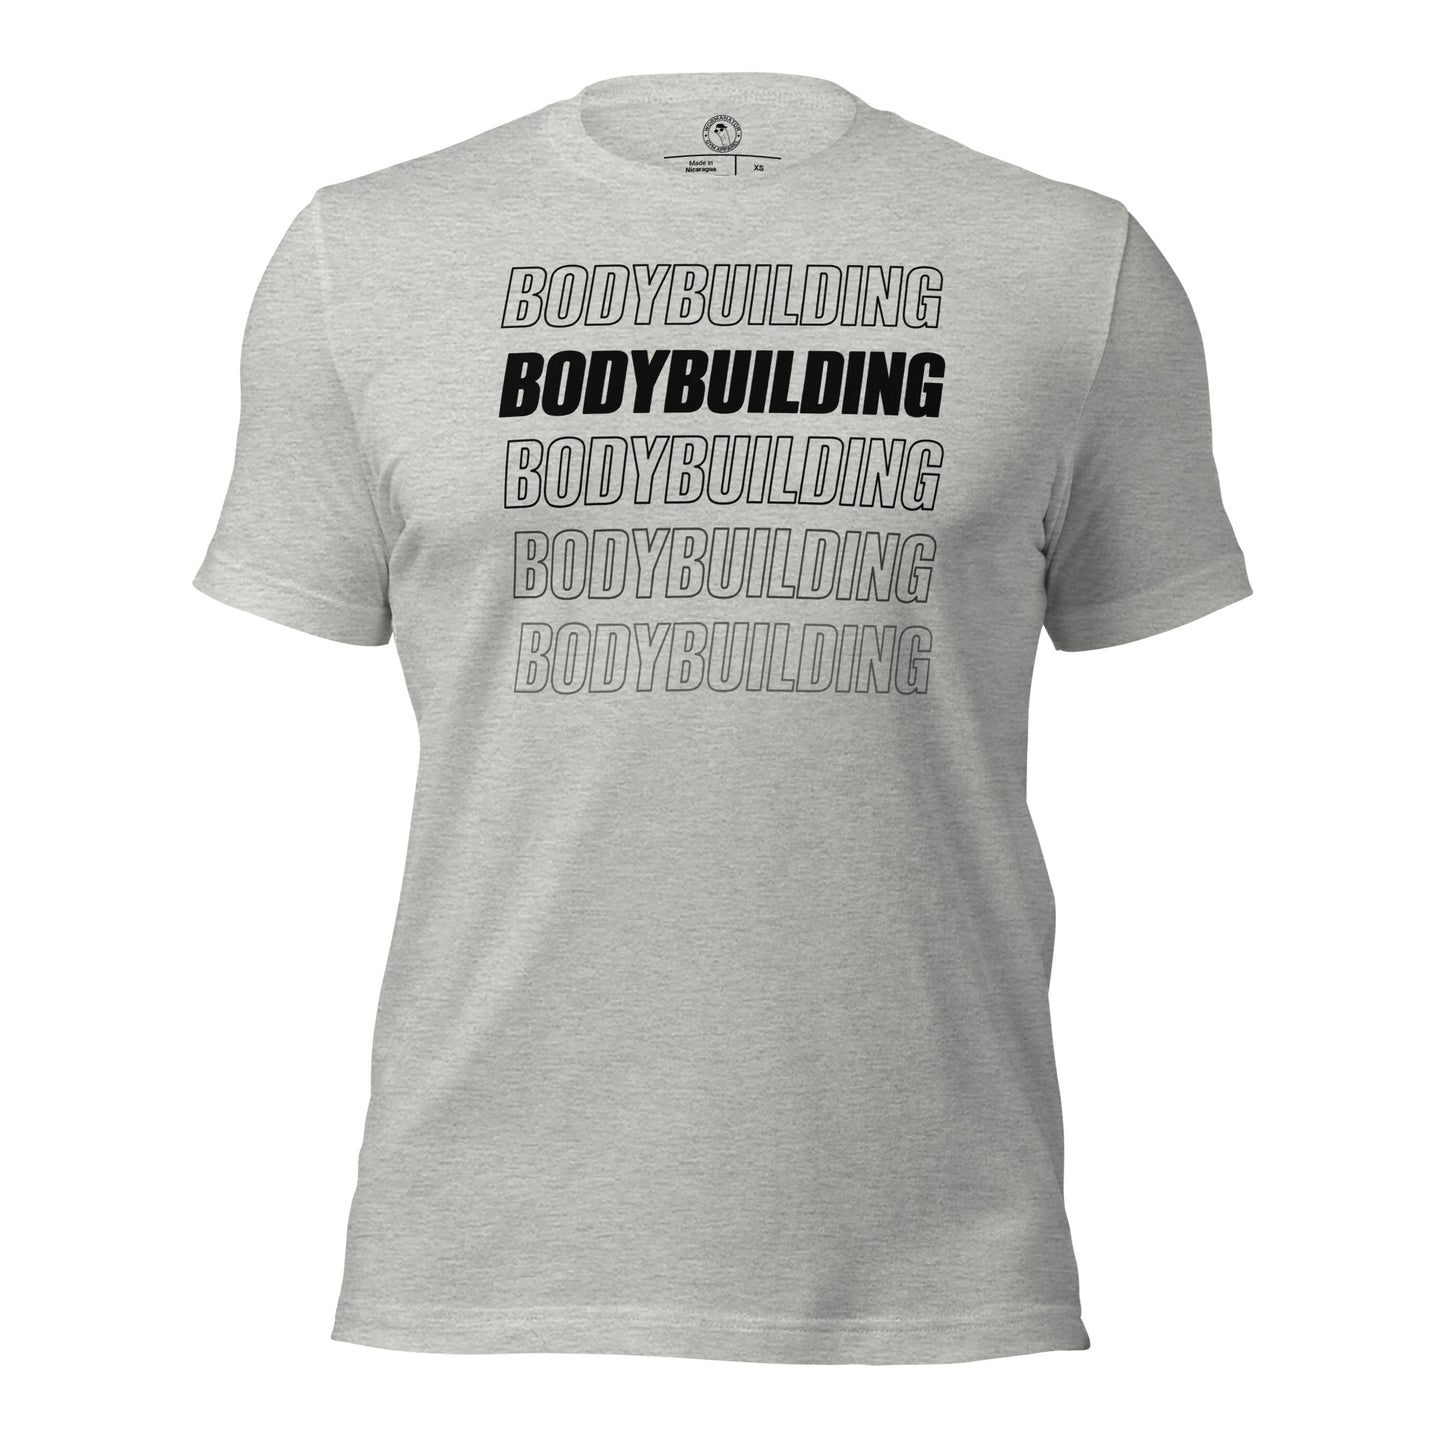 Bodybuilding Shirt in Athletic Heather